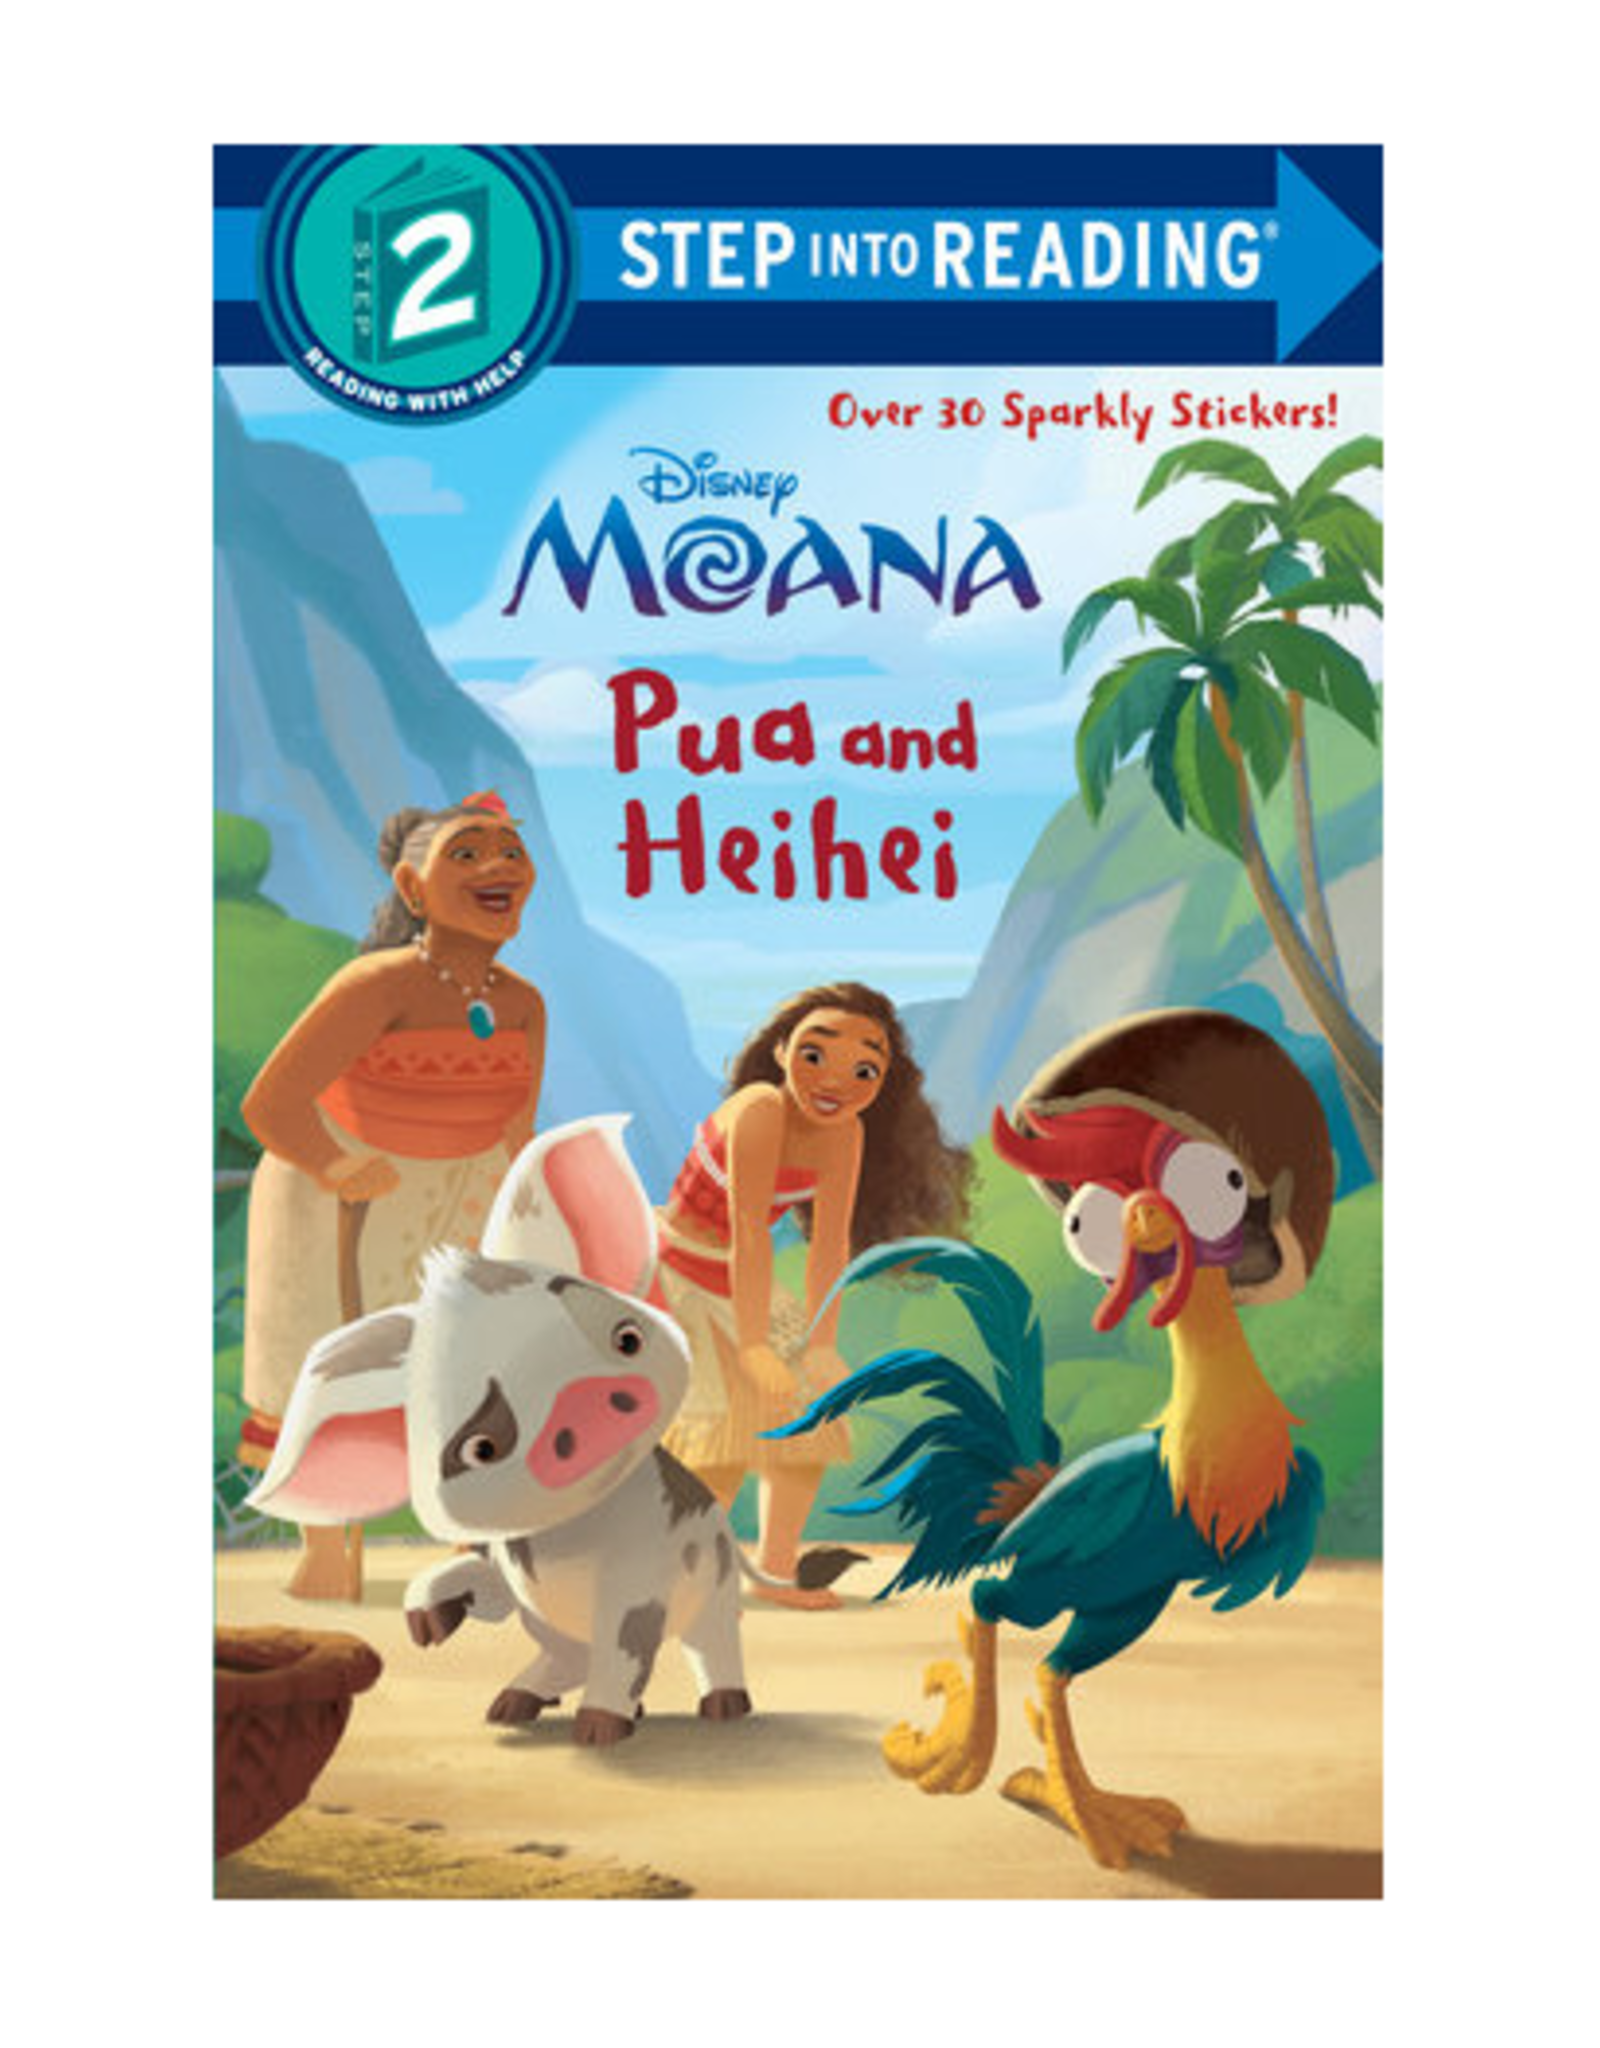 Book - Step into Reading - 2 - Moana Pua and Heihei